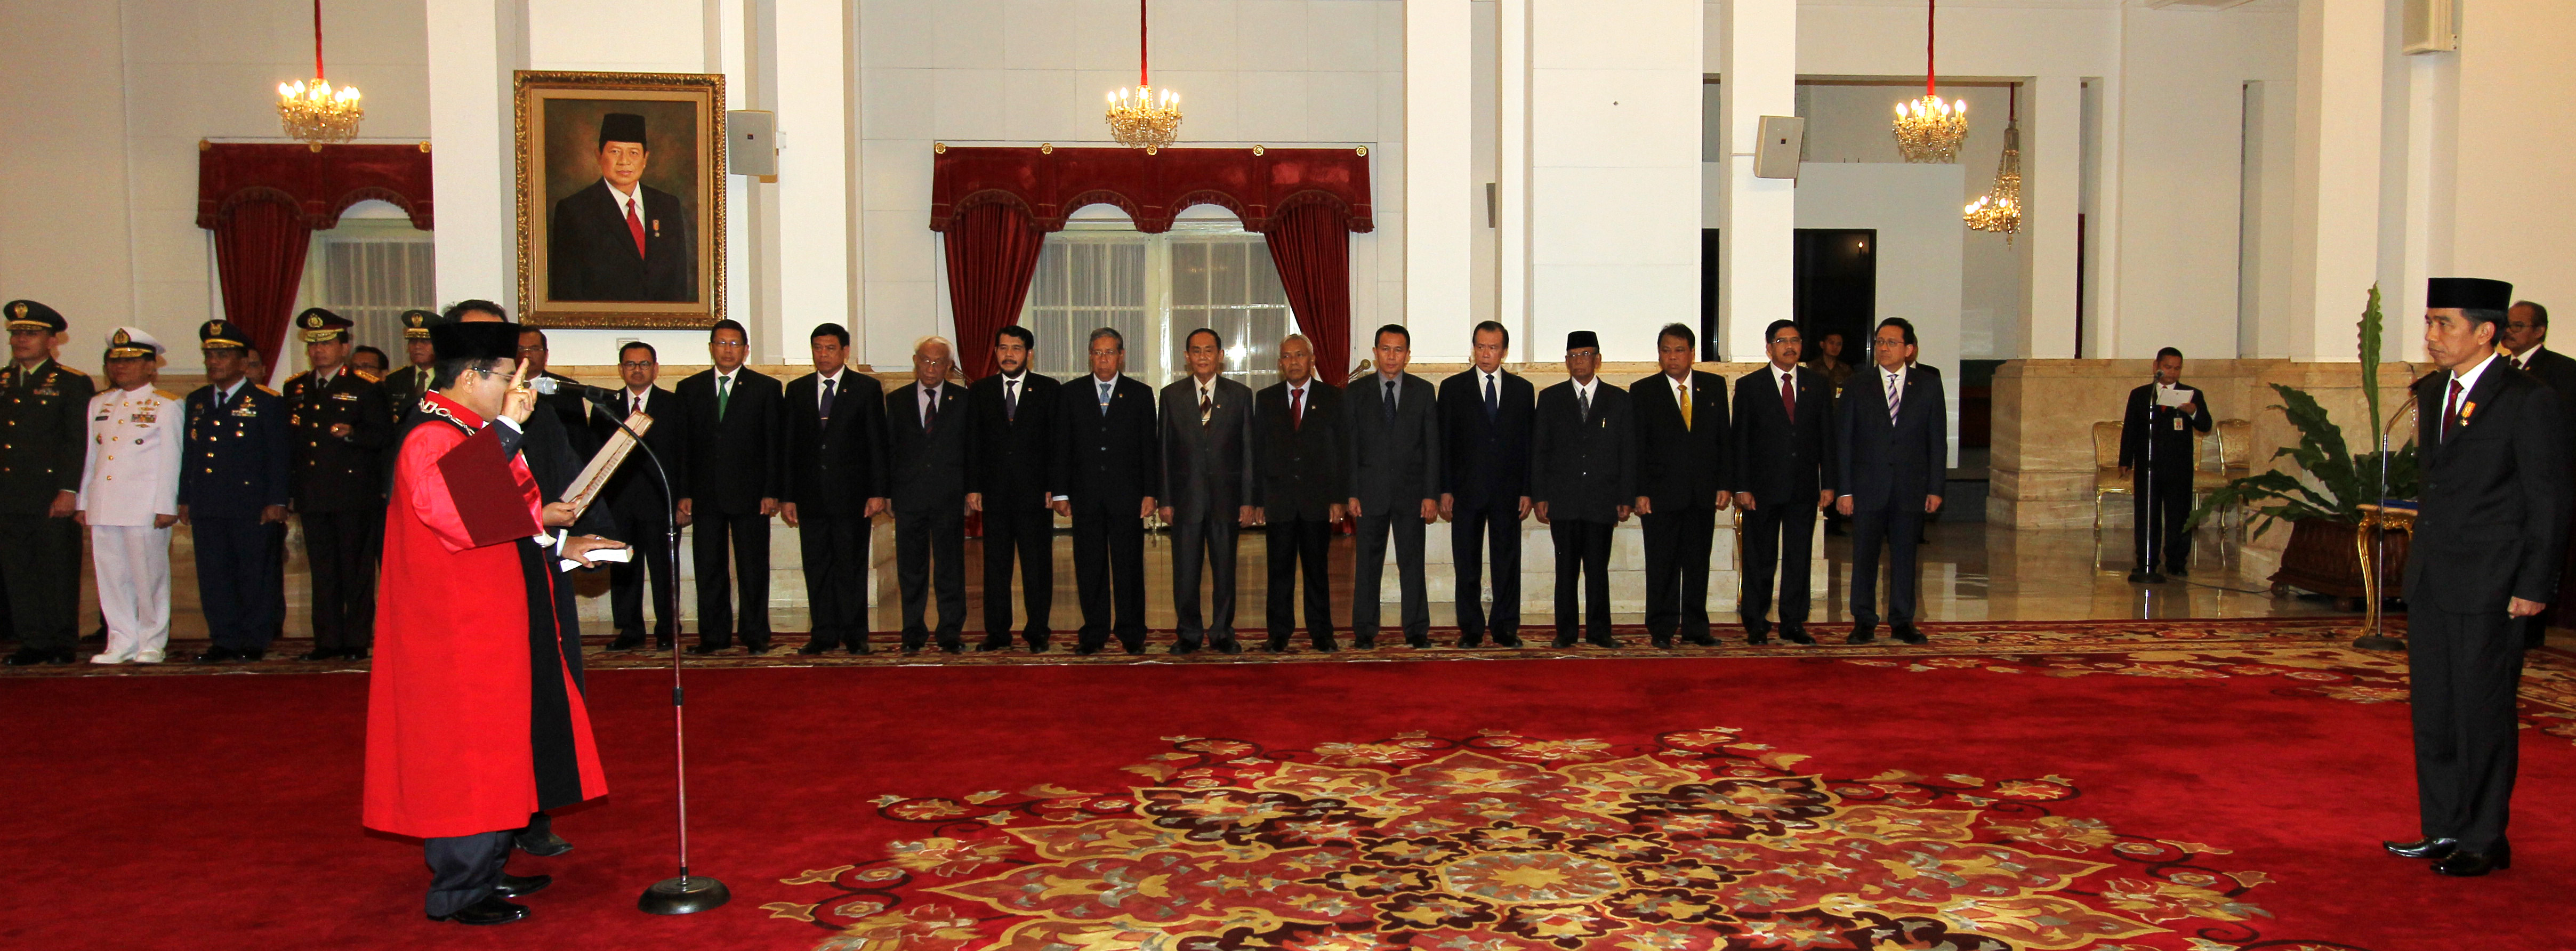 Pembacaan Sumpah dihadapan Pemuka Agama yang disaksikan oleh Presiden Republik Indonesia di Istana Negara 28 April 2015